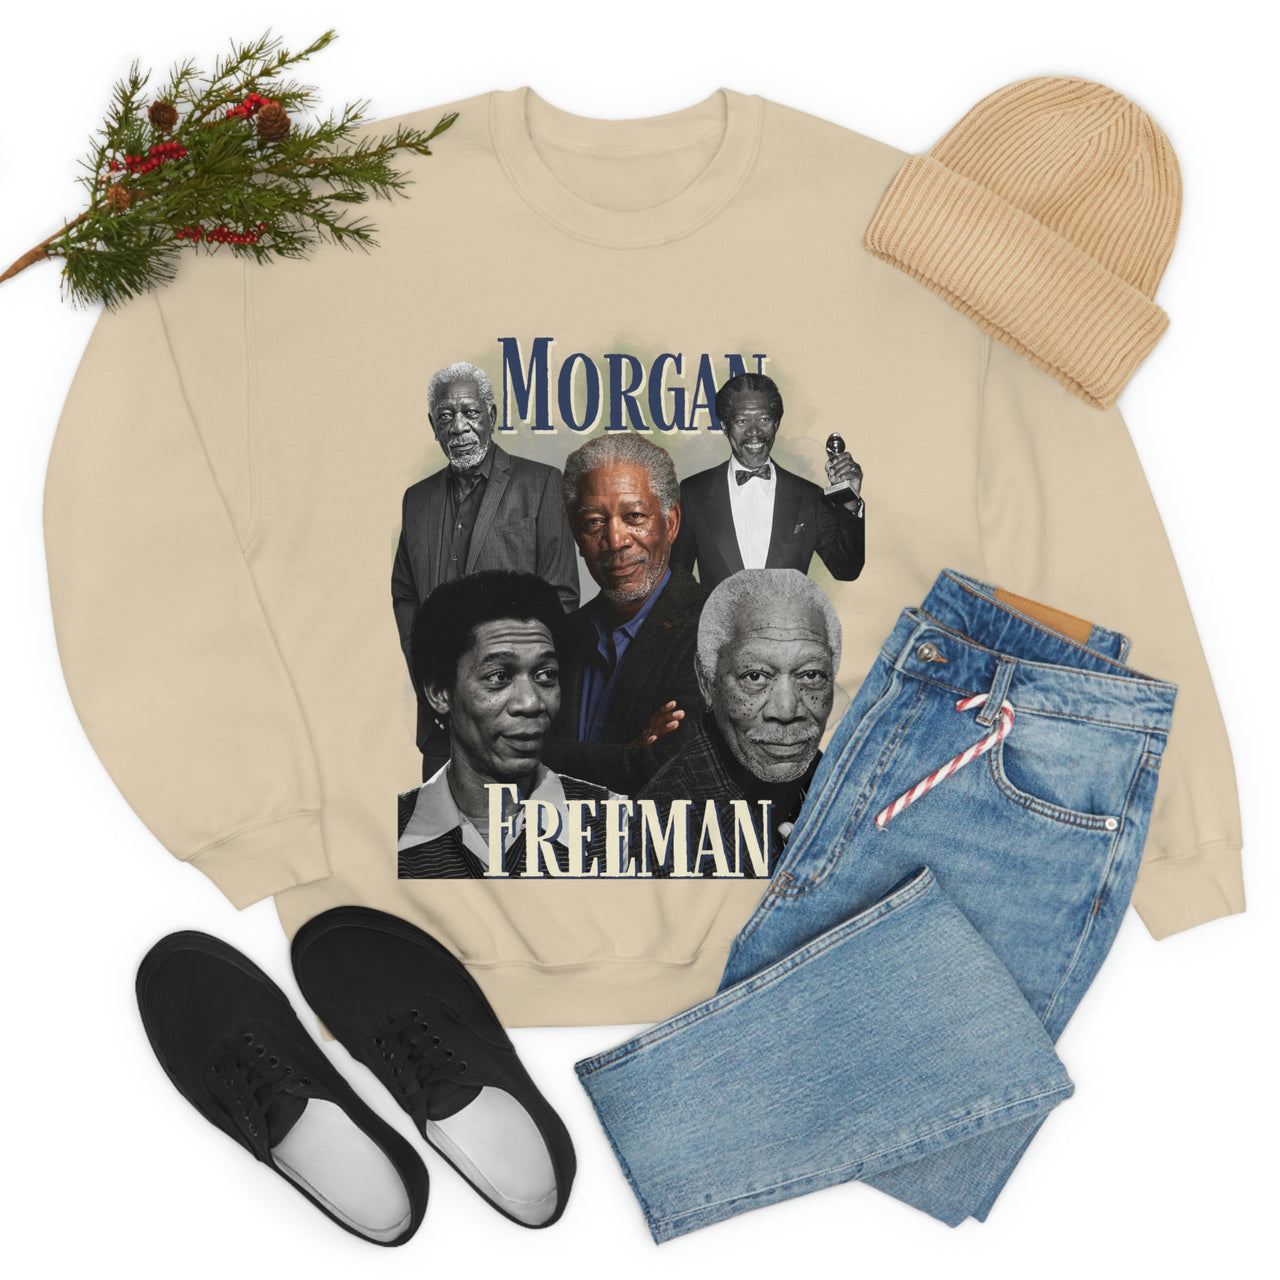 Morgan Freeman Sweatshirt, 90s Rap Style Bootleg Driving Miss Daisy Pullover Crewneck, Million Dollar Baby Movie Fan Gift